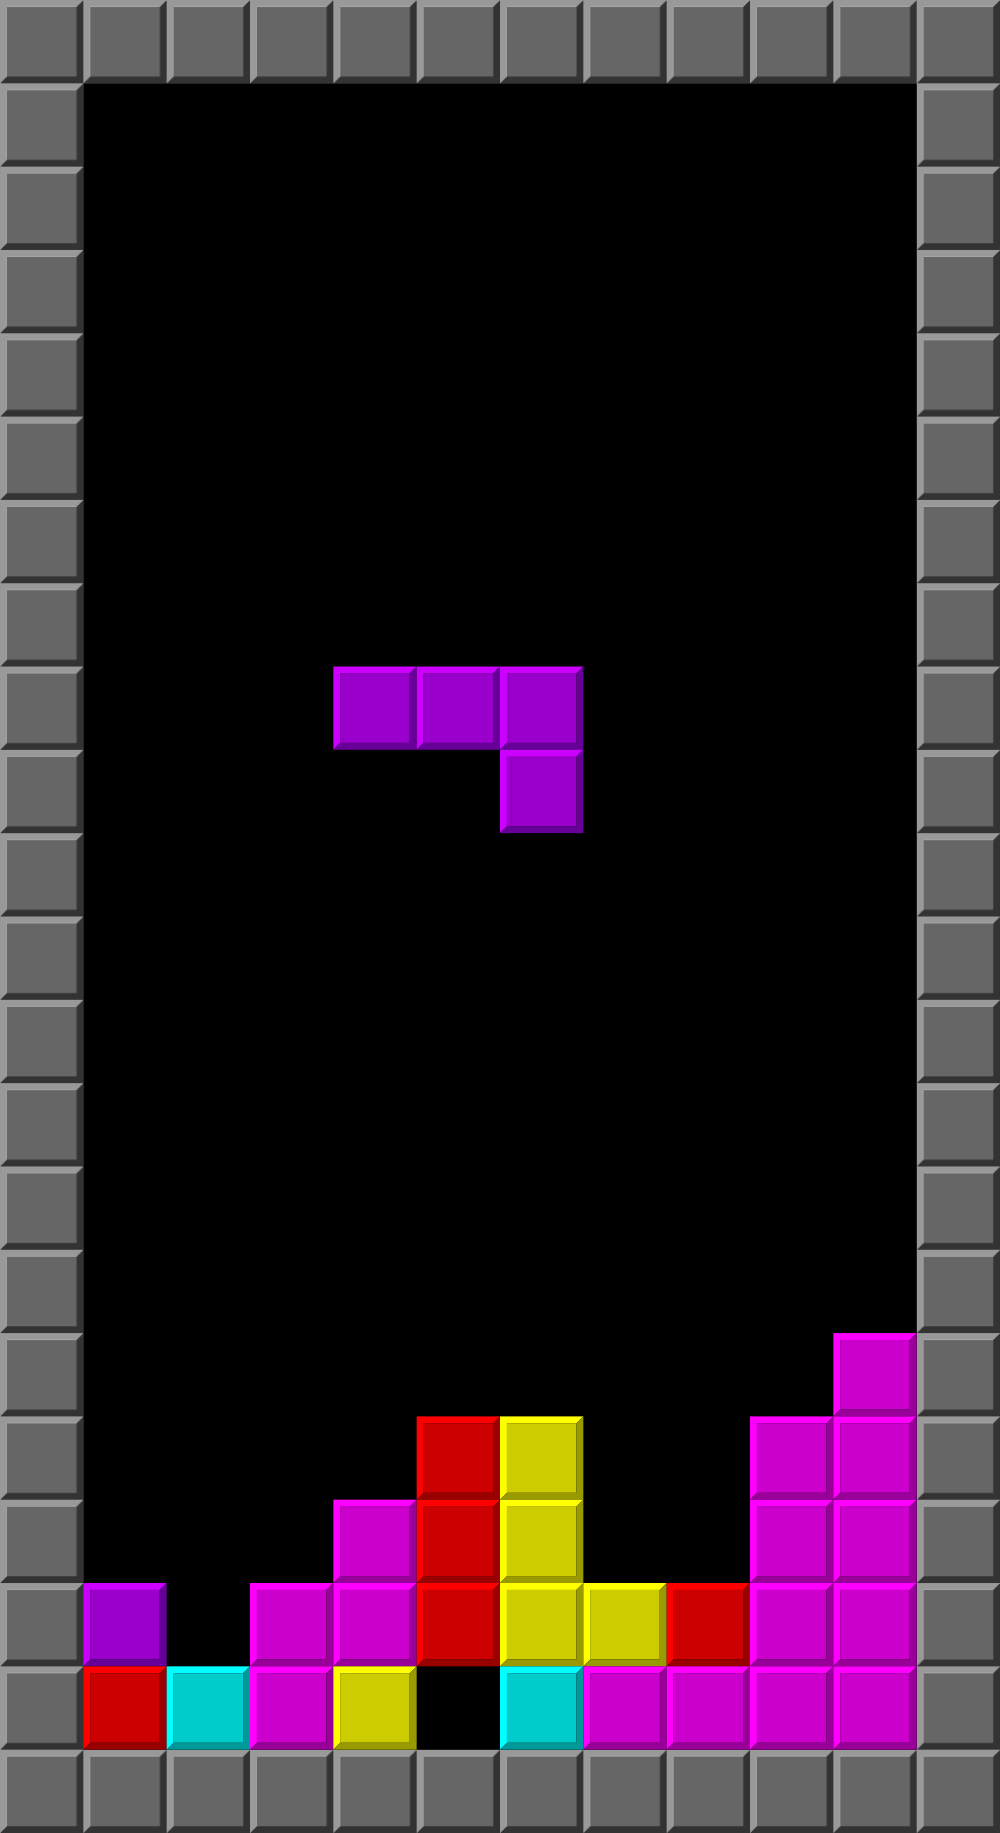 A screenshot of the Tetris videogame.